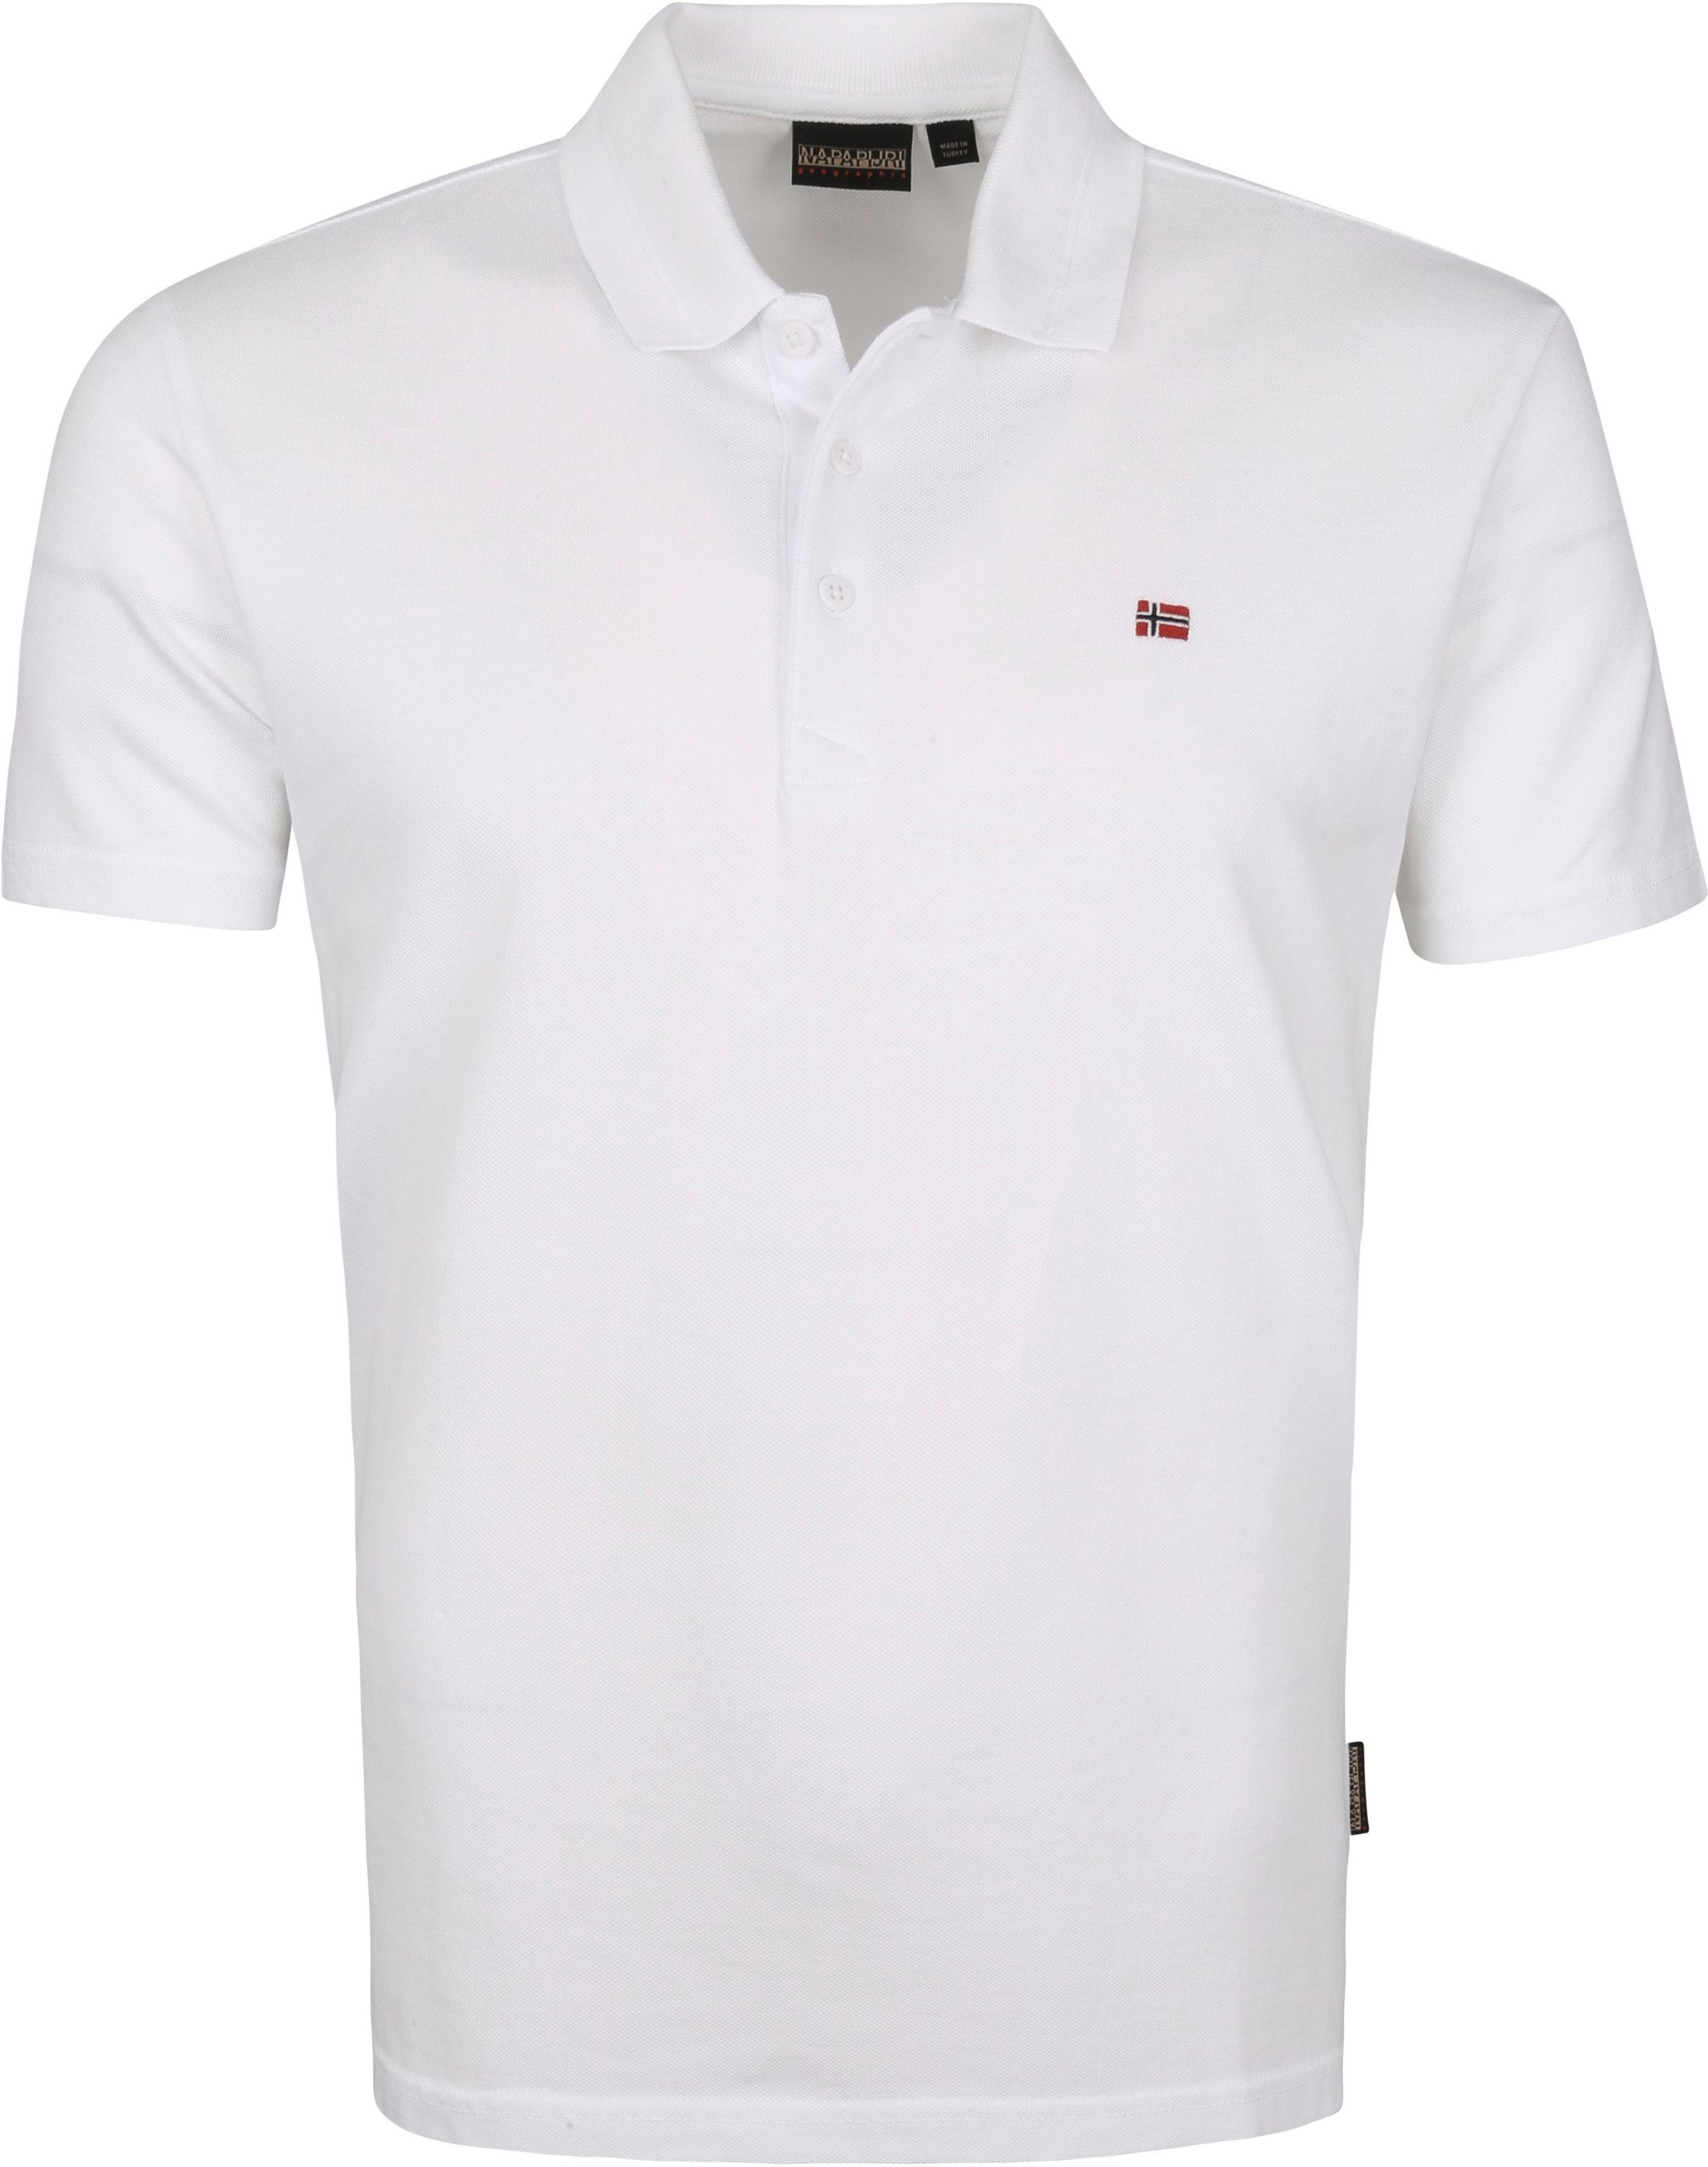 Napapijri Ealis Polo Shirt White size 3XL